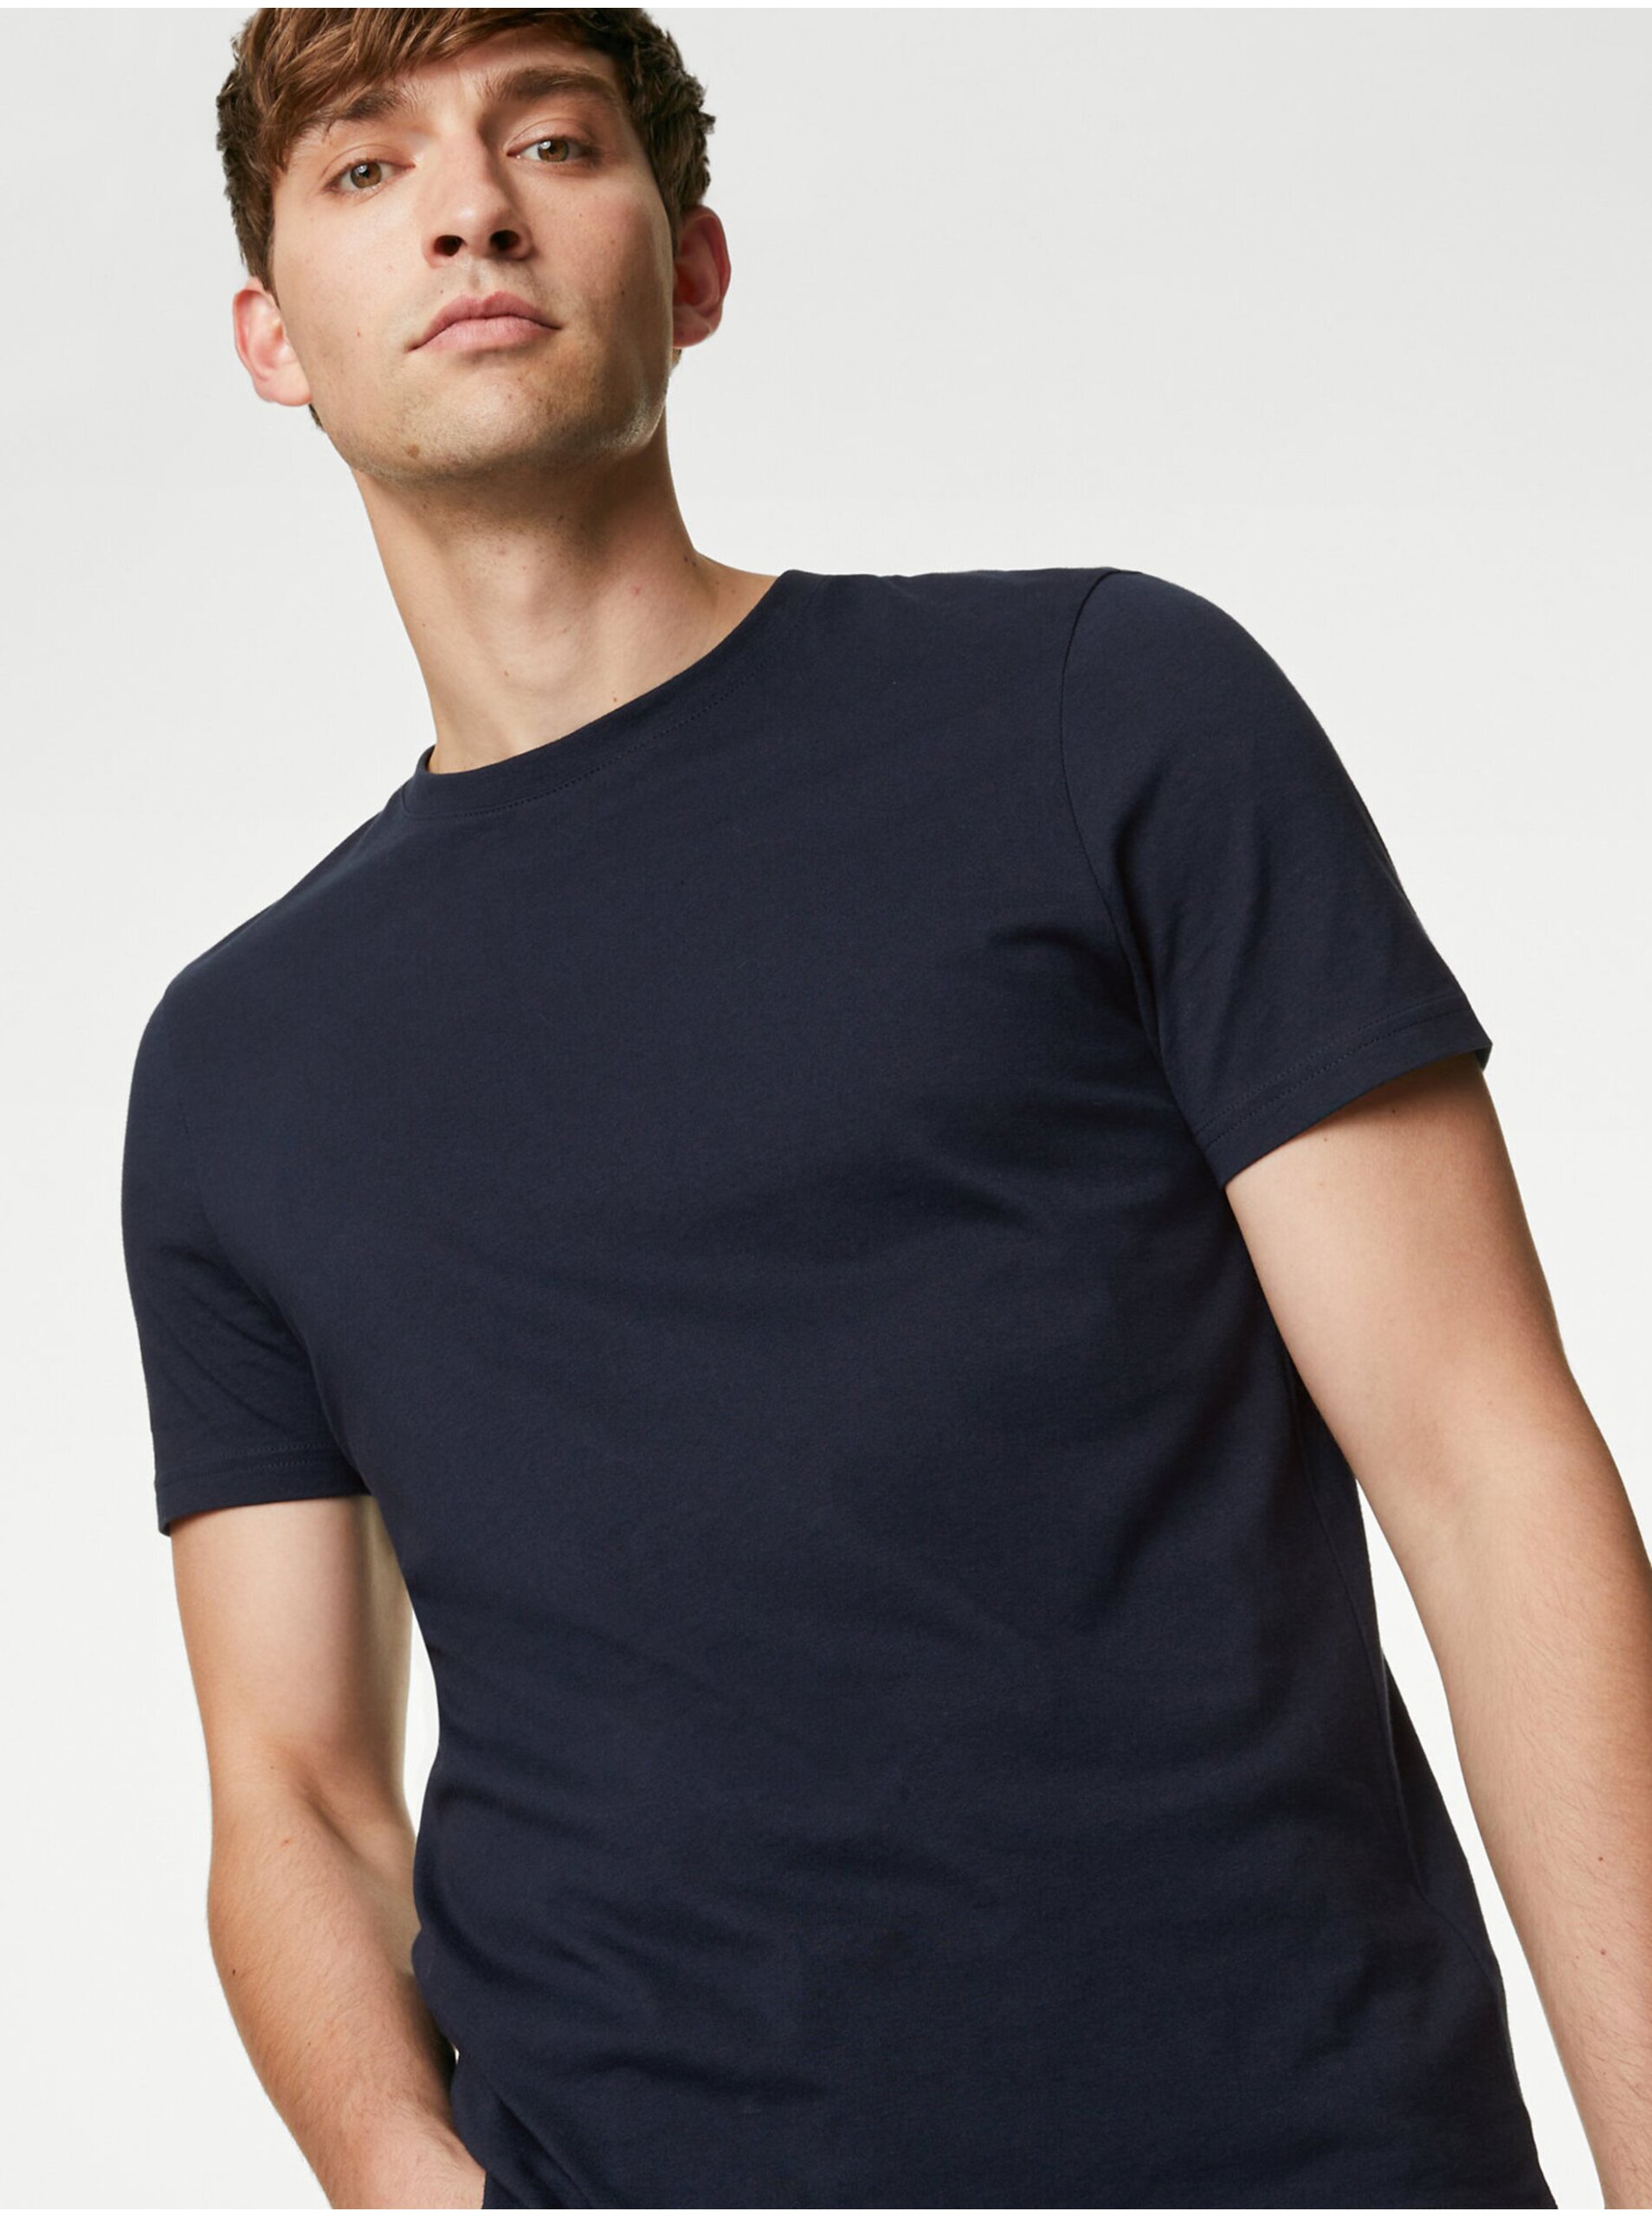 Lacno Tmavomodré pánske basic tričko Marks & Spencer